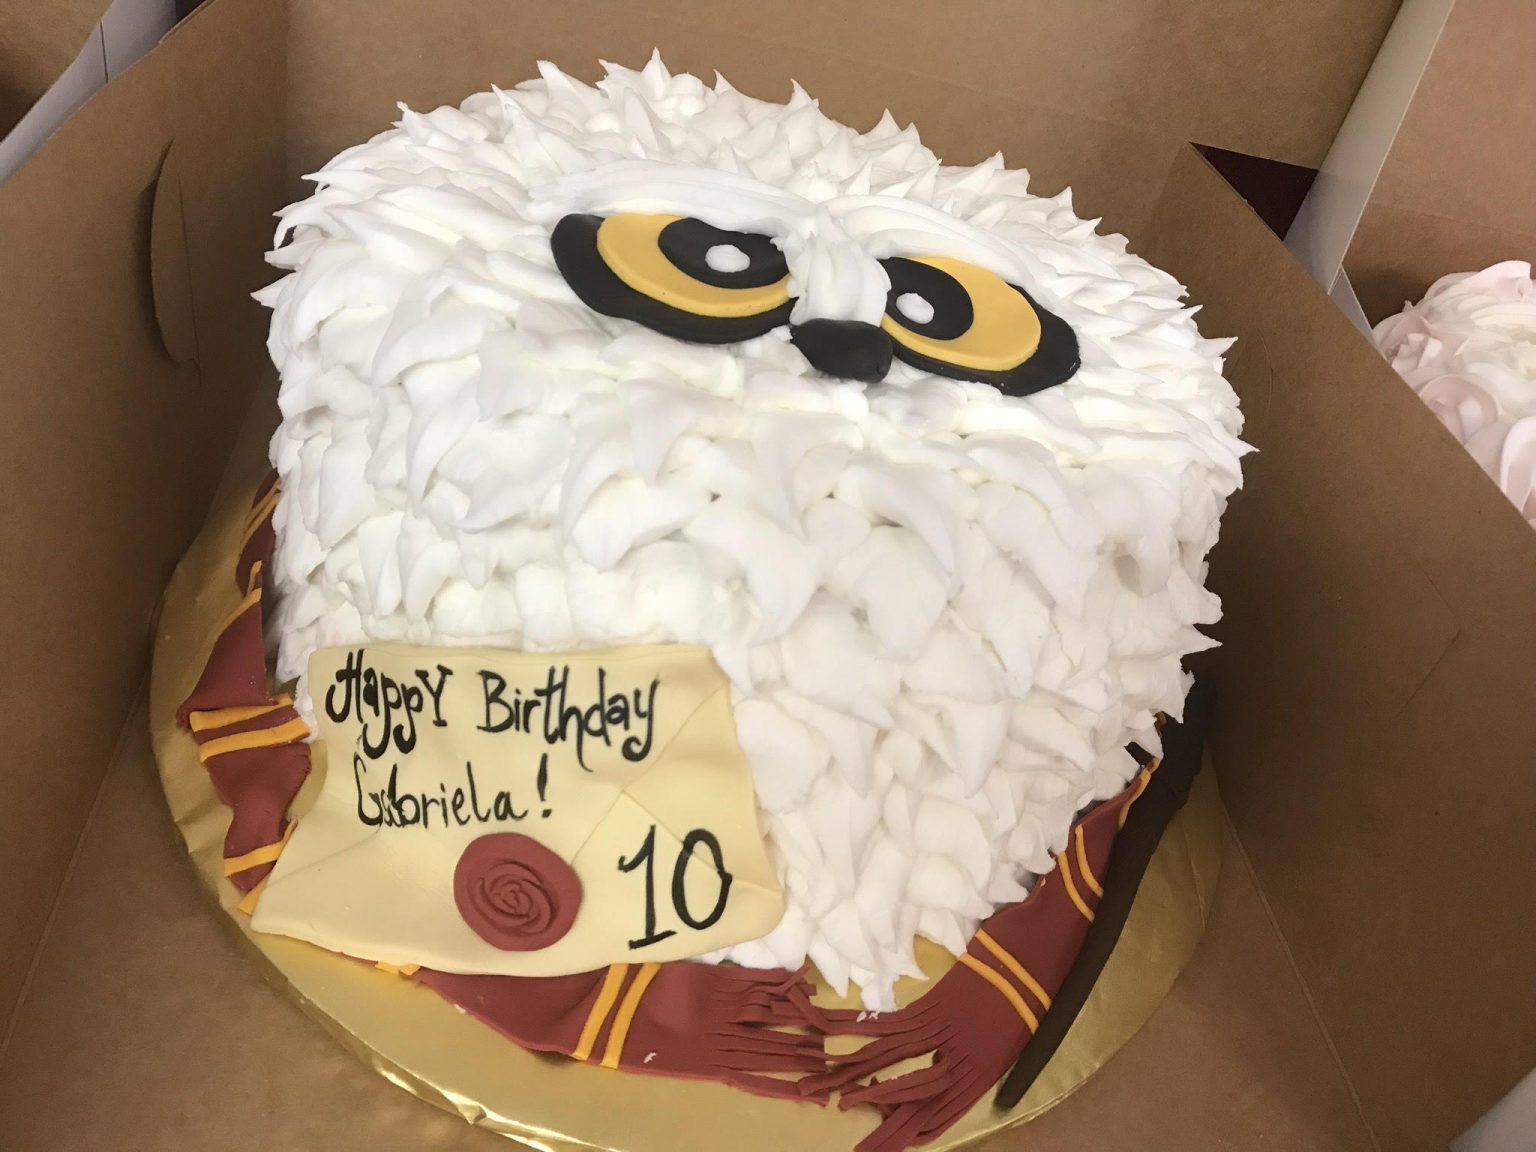 Custom Harry Potter Cakes - Harry Potter Cake 2 1536x1152